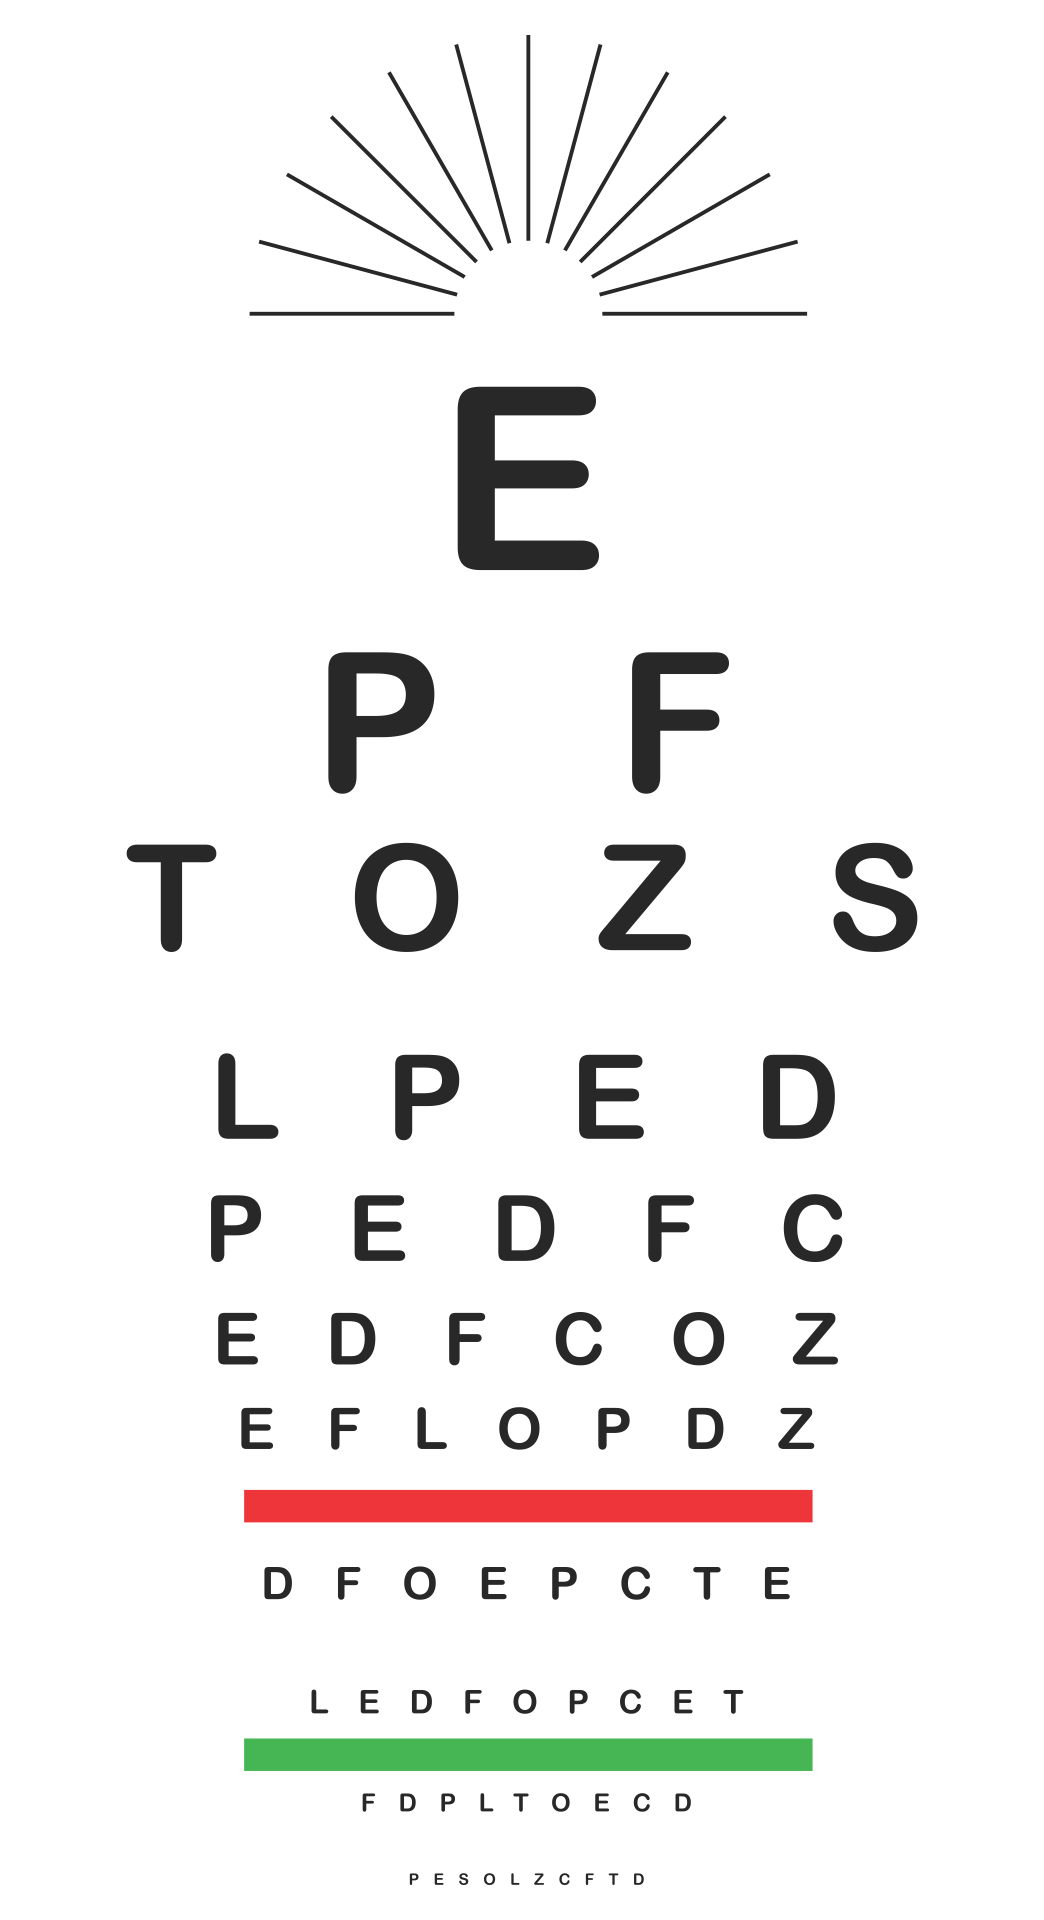 printable-snellen-eye-chart